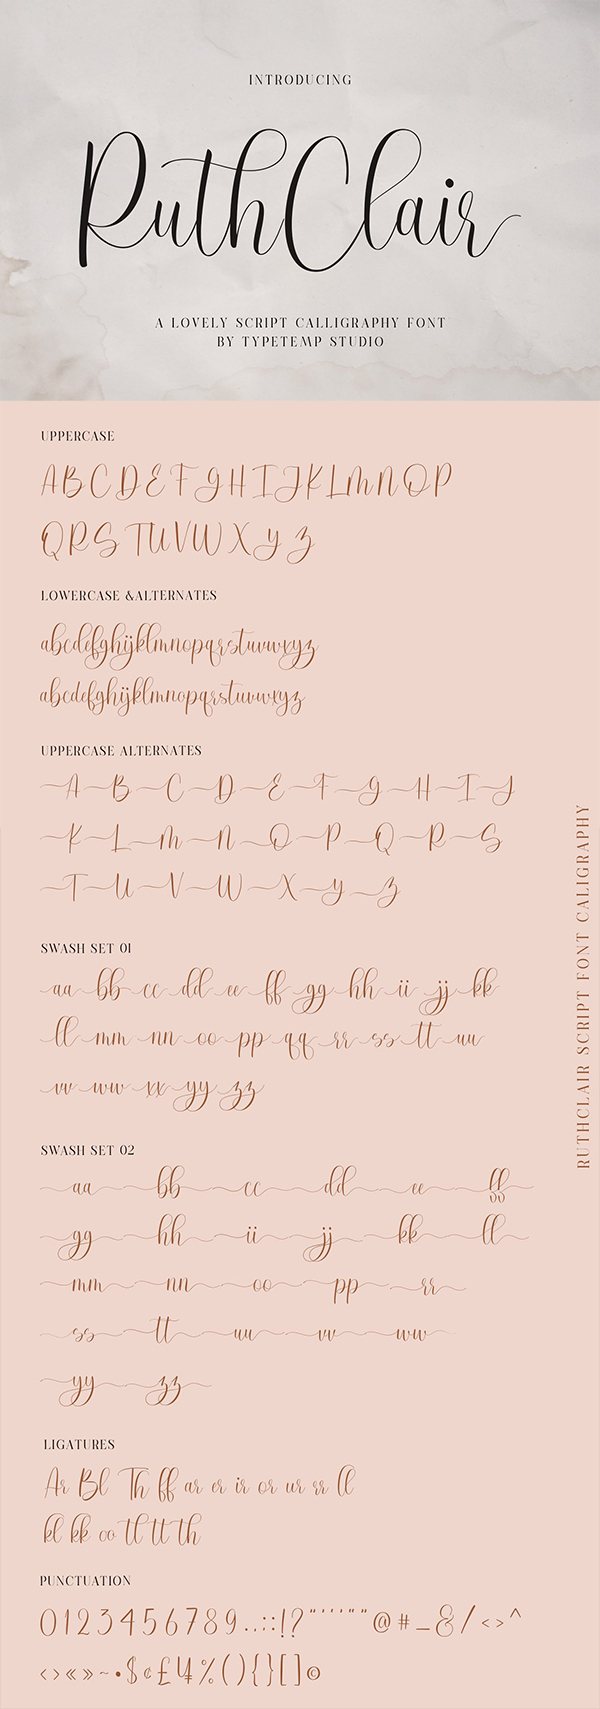 RuthClair Lovely Script Font